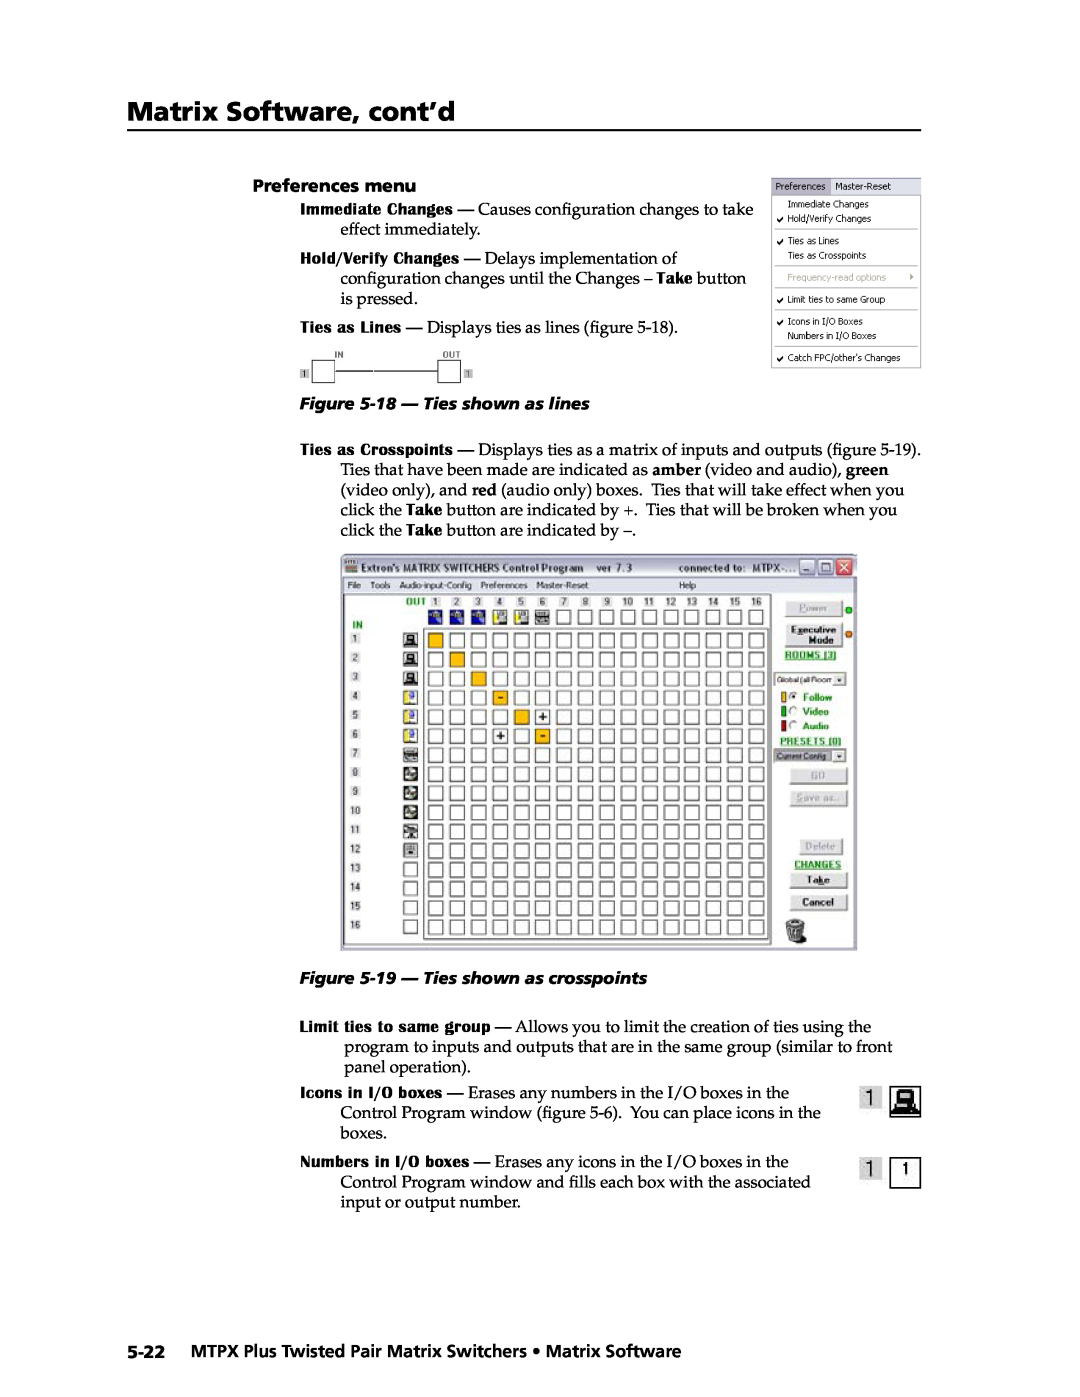 Extron electronic MTPX Plus Series manual Matrix Software, cont’d, Preferences menu, 18 - Ties shown as lines 